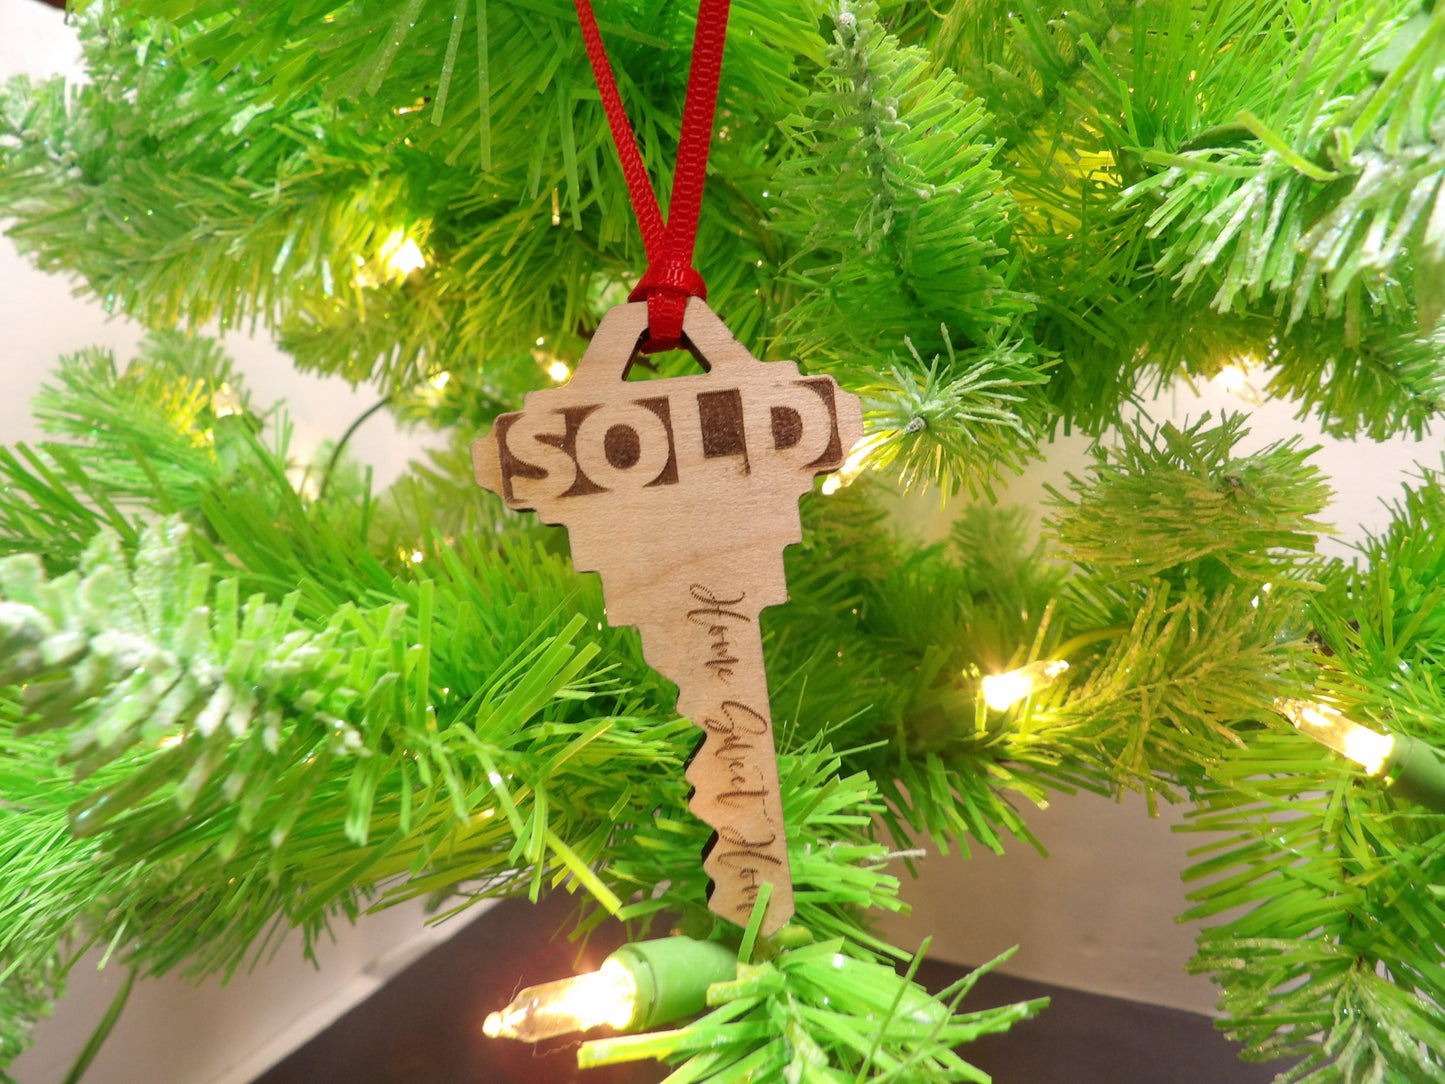 SOLD Key Ornament